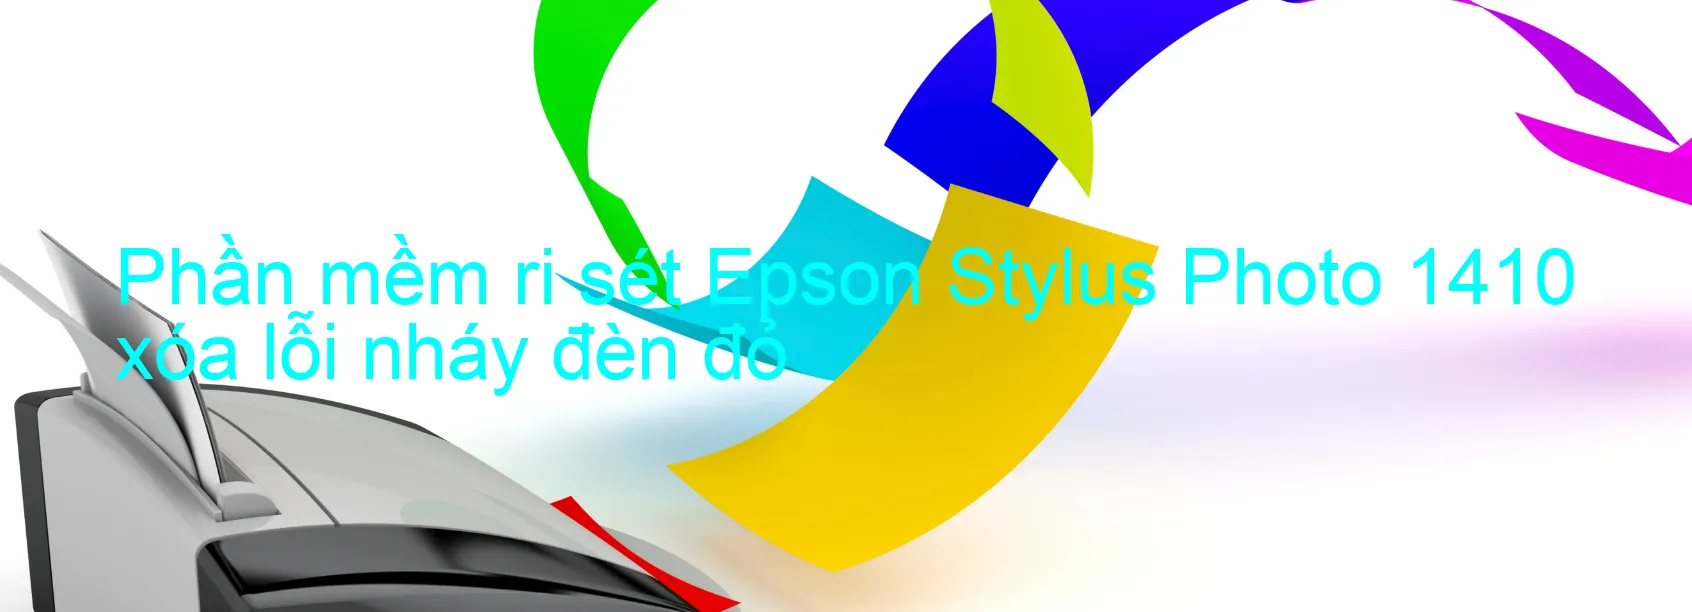 Phần mềm reset Epson Stylus Photo 1410 xóa lỗi nháy đèn đỏ